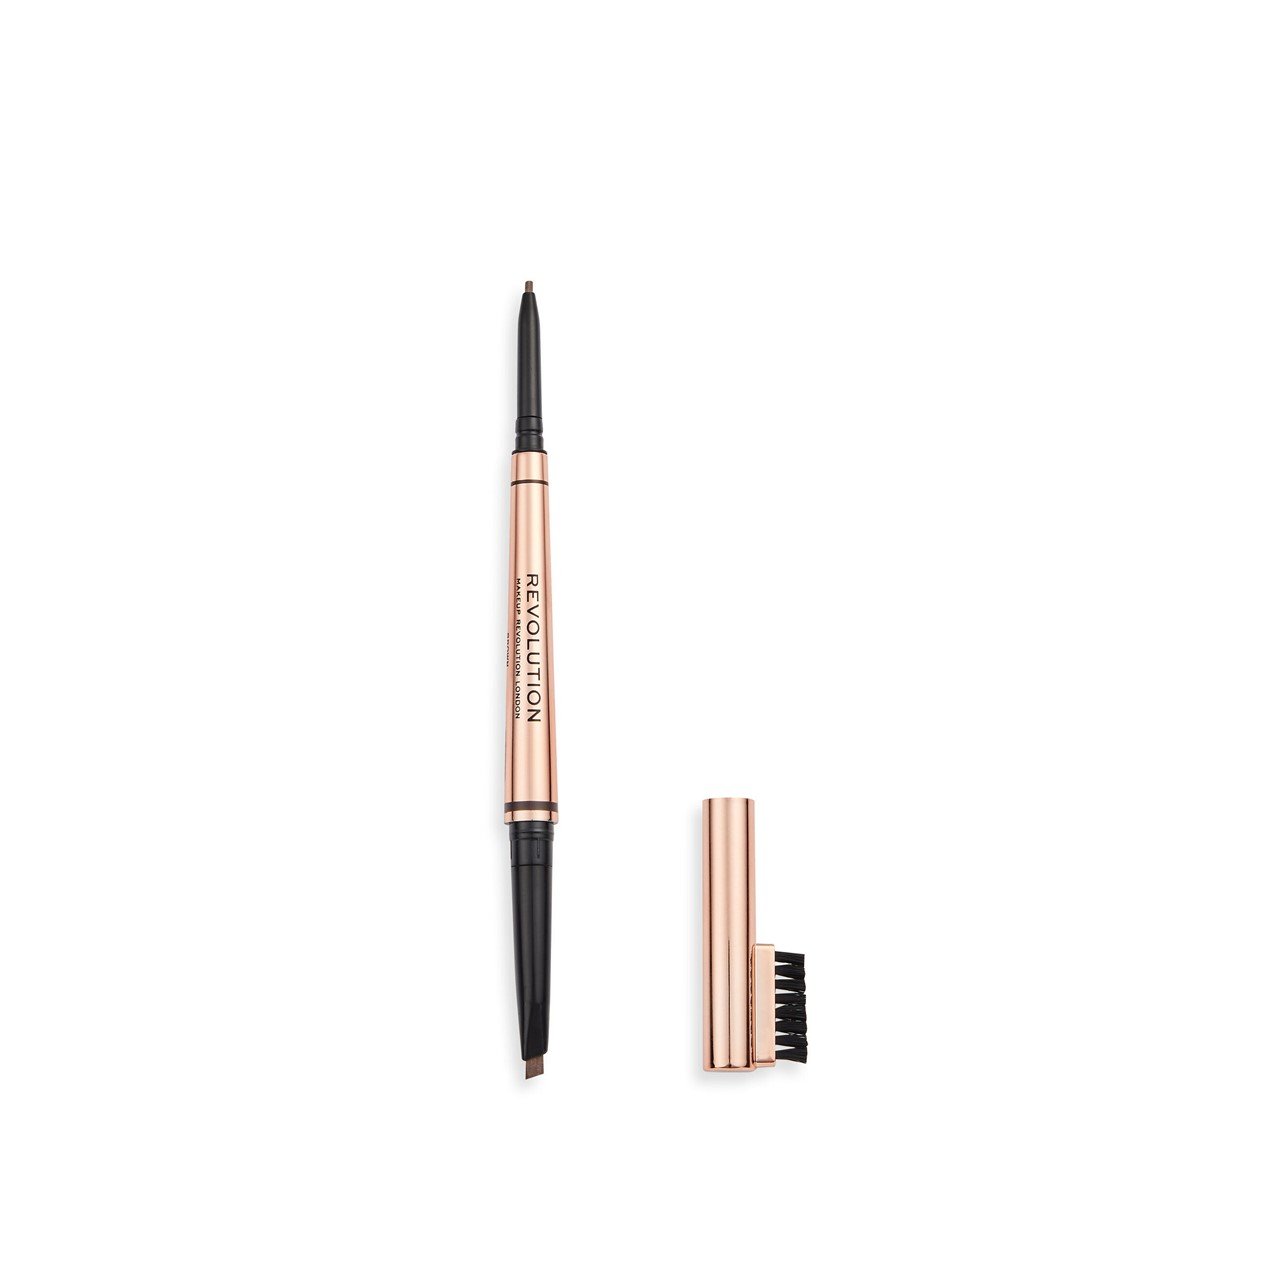 Makeup Revolution Balayage Duo Brow Pencil Brown 0.38g (0.01oz)